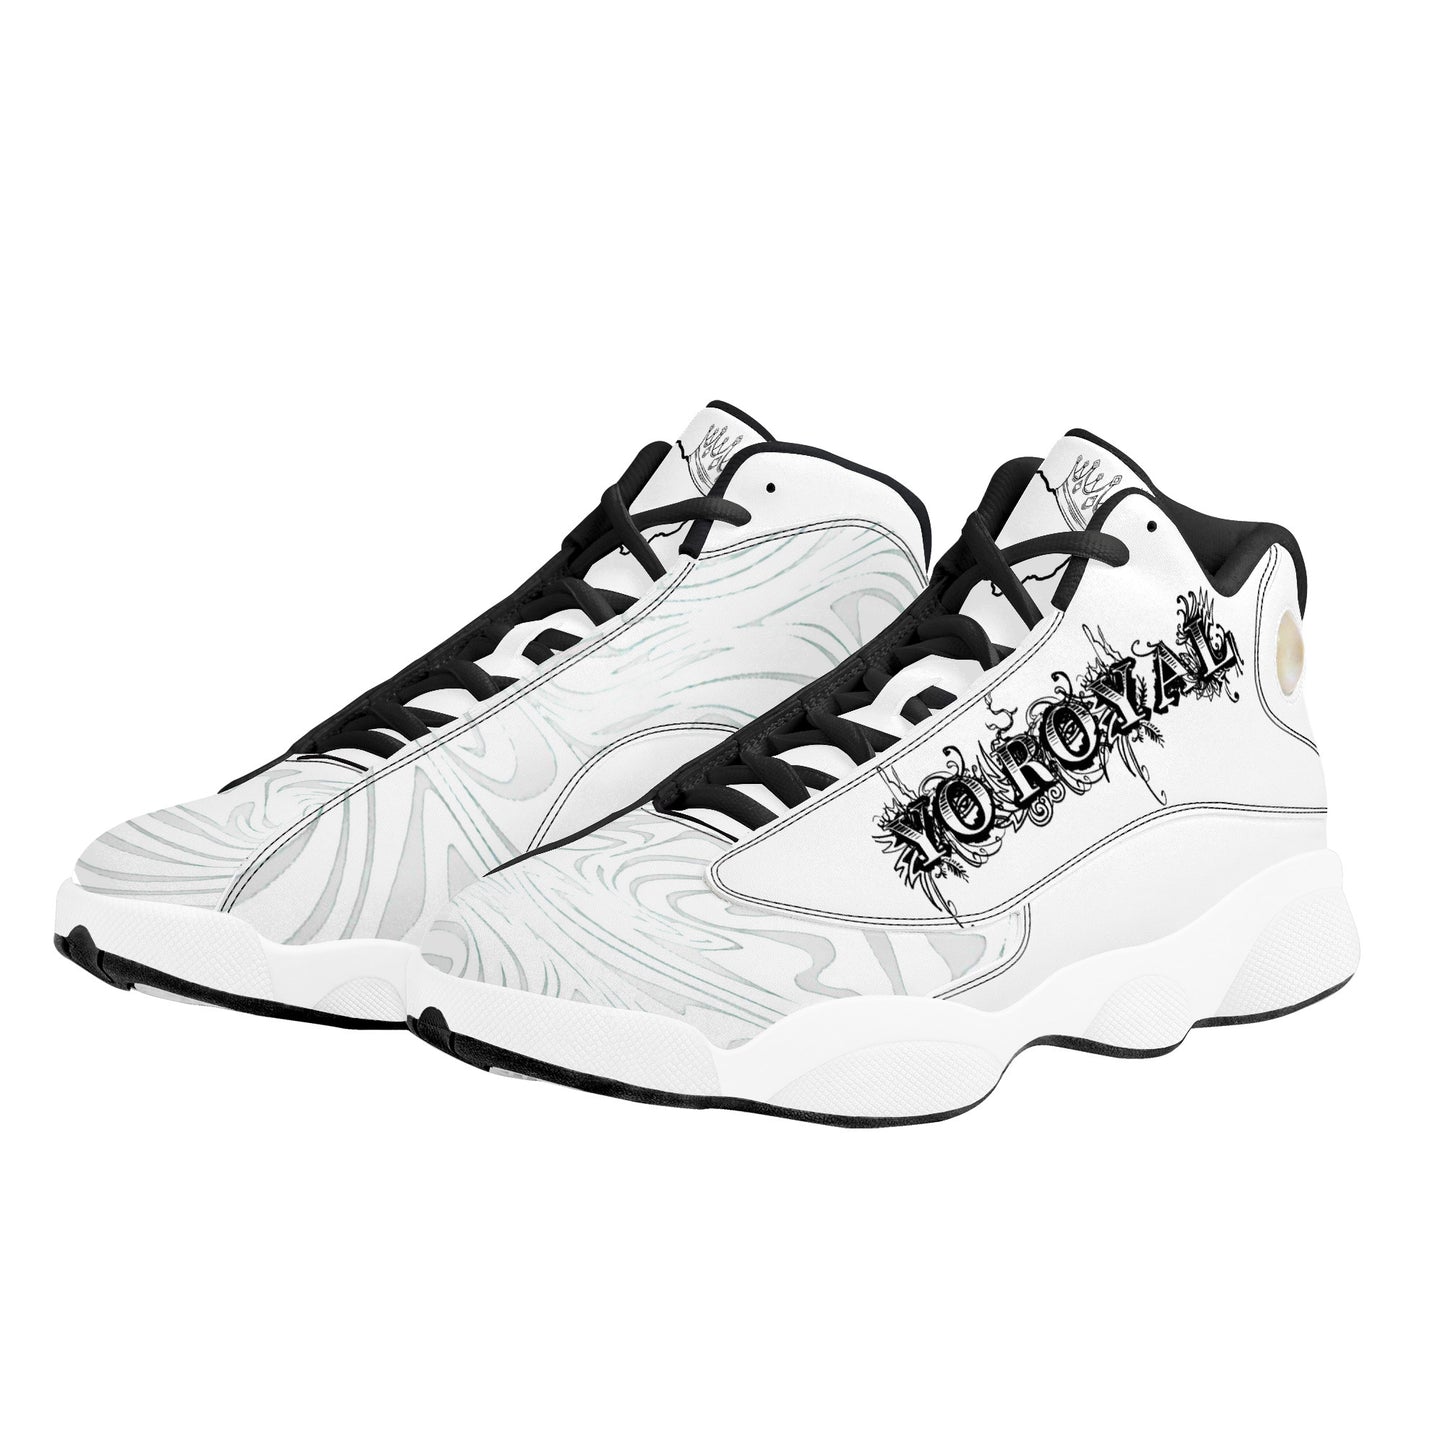 Basketball Shoes - Black White